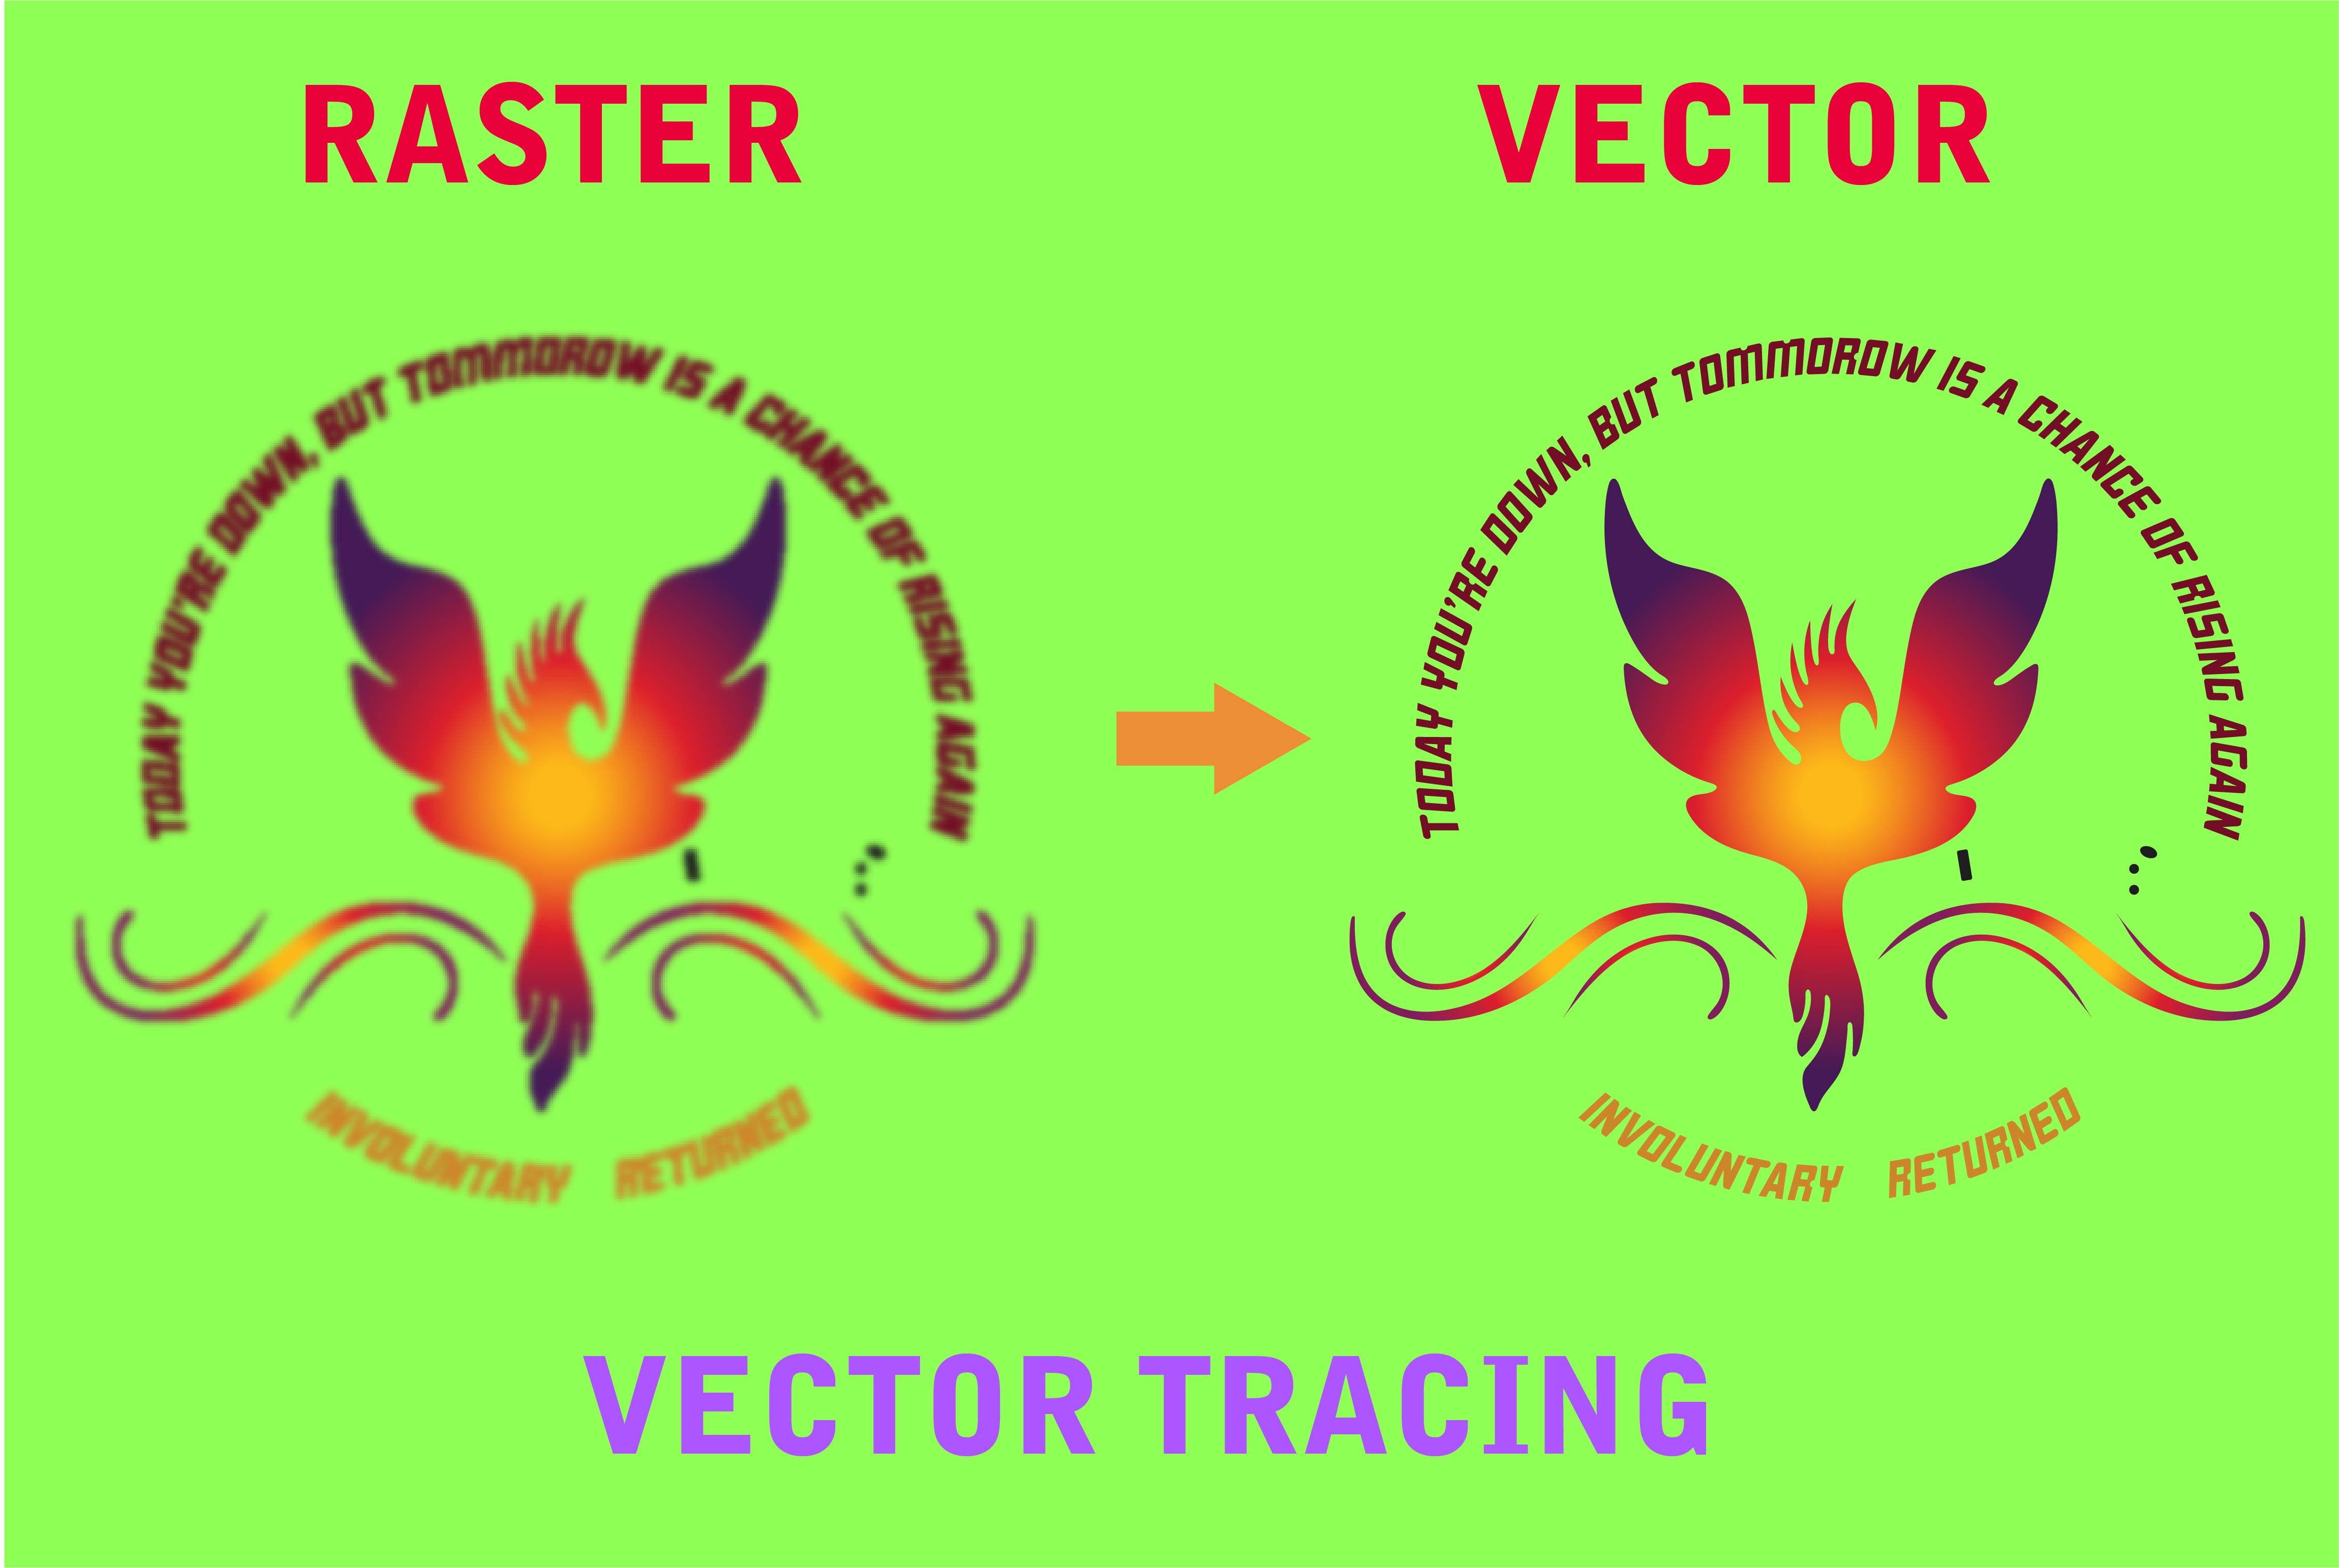 I will do vector tracing of logo using Adobe Illustrator